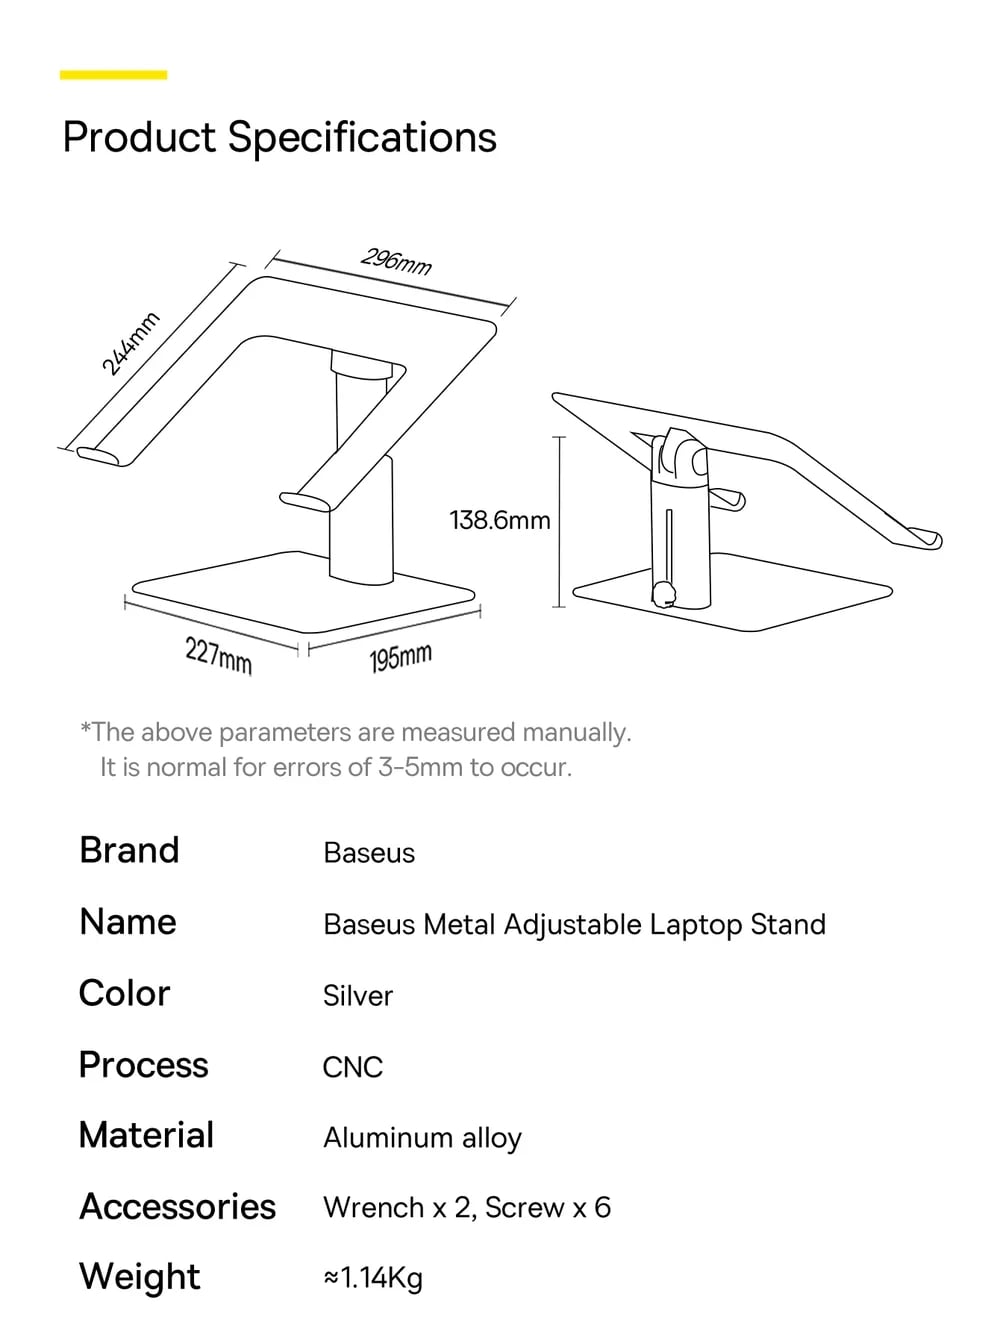 Baseus Metal Adjustable Laptop Stand 11